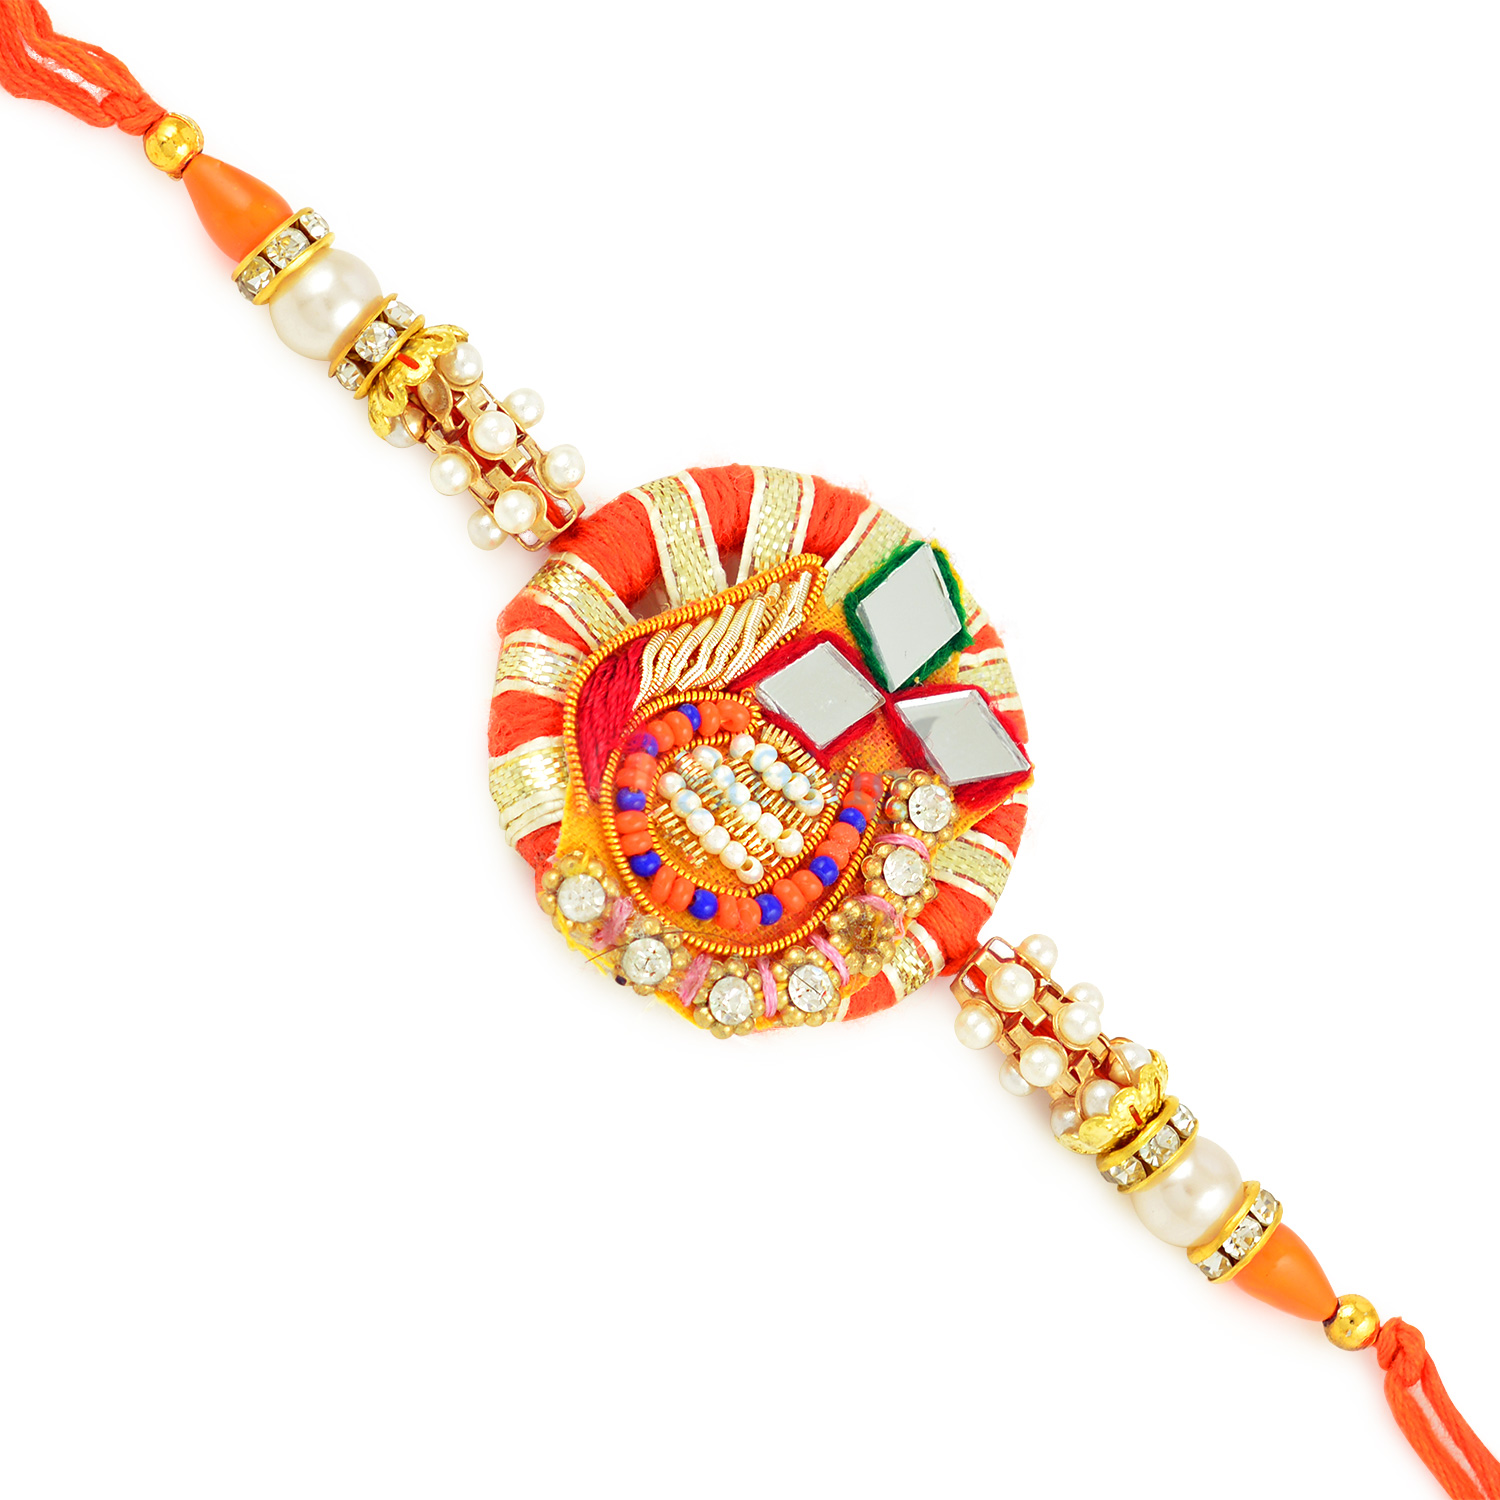 Rajasthani Theme Peacock Designed Exclusive Rakhi